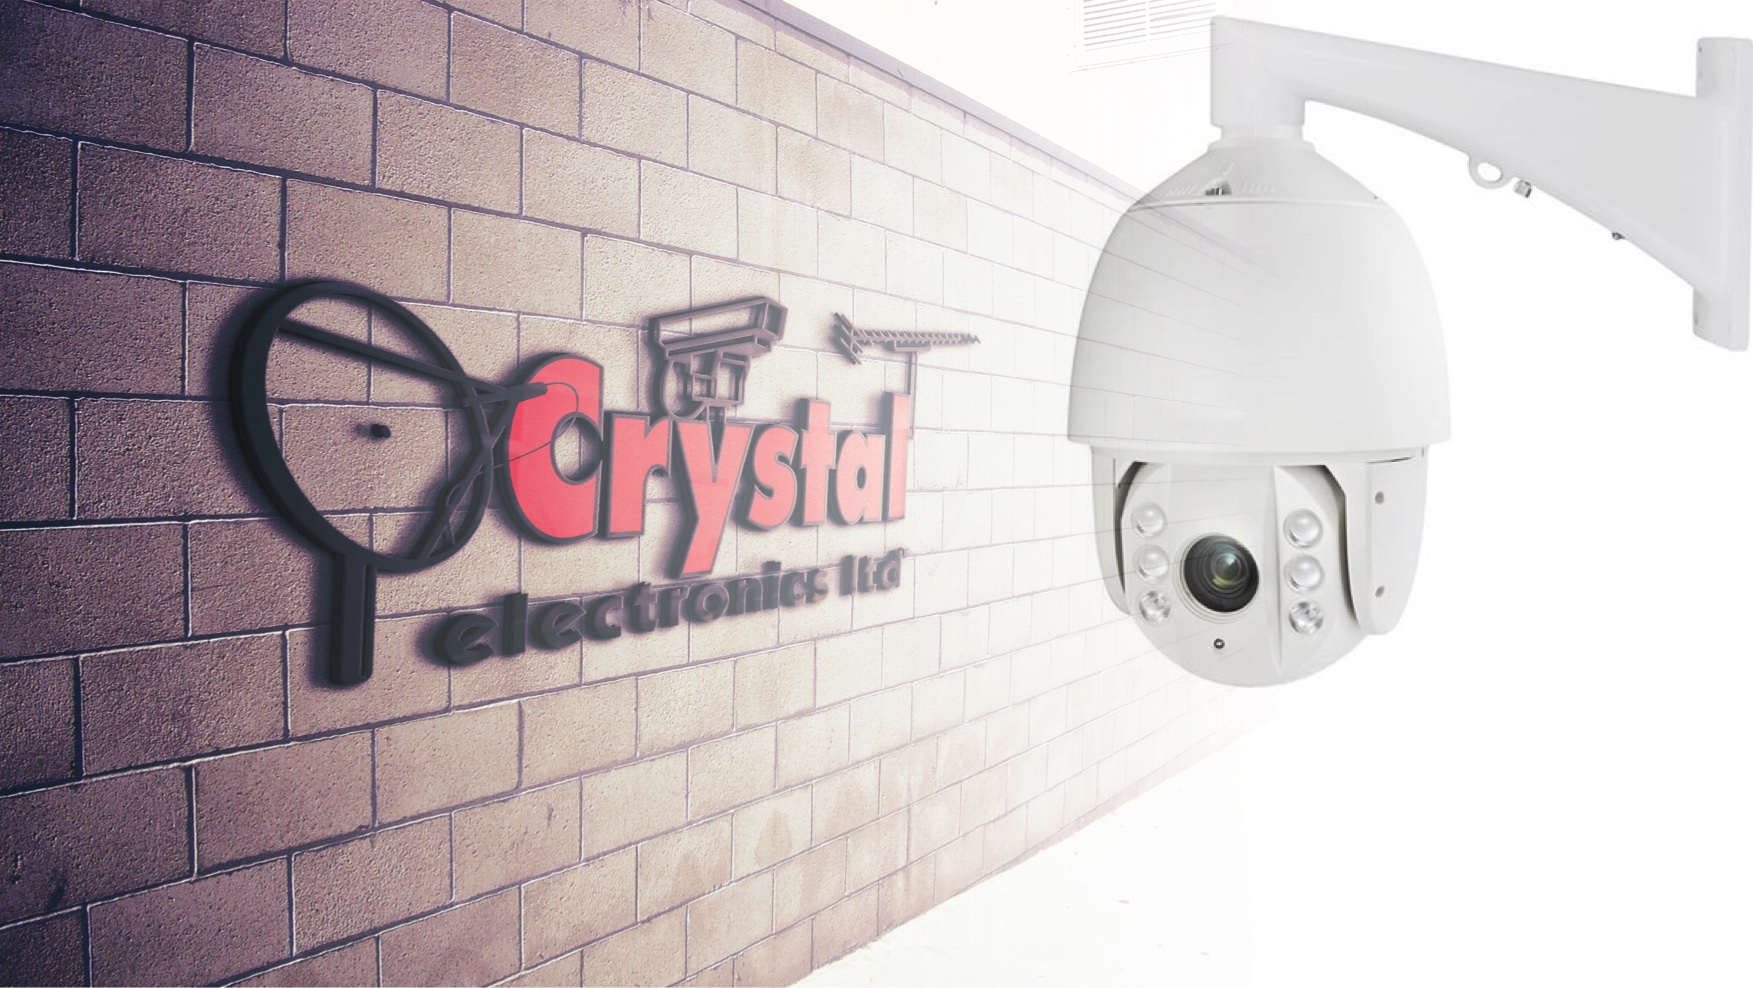 Crystal Electronics Security